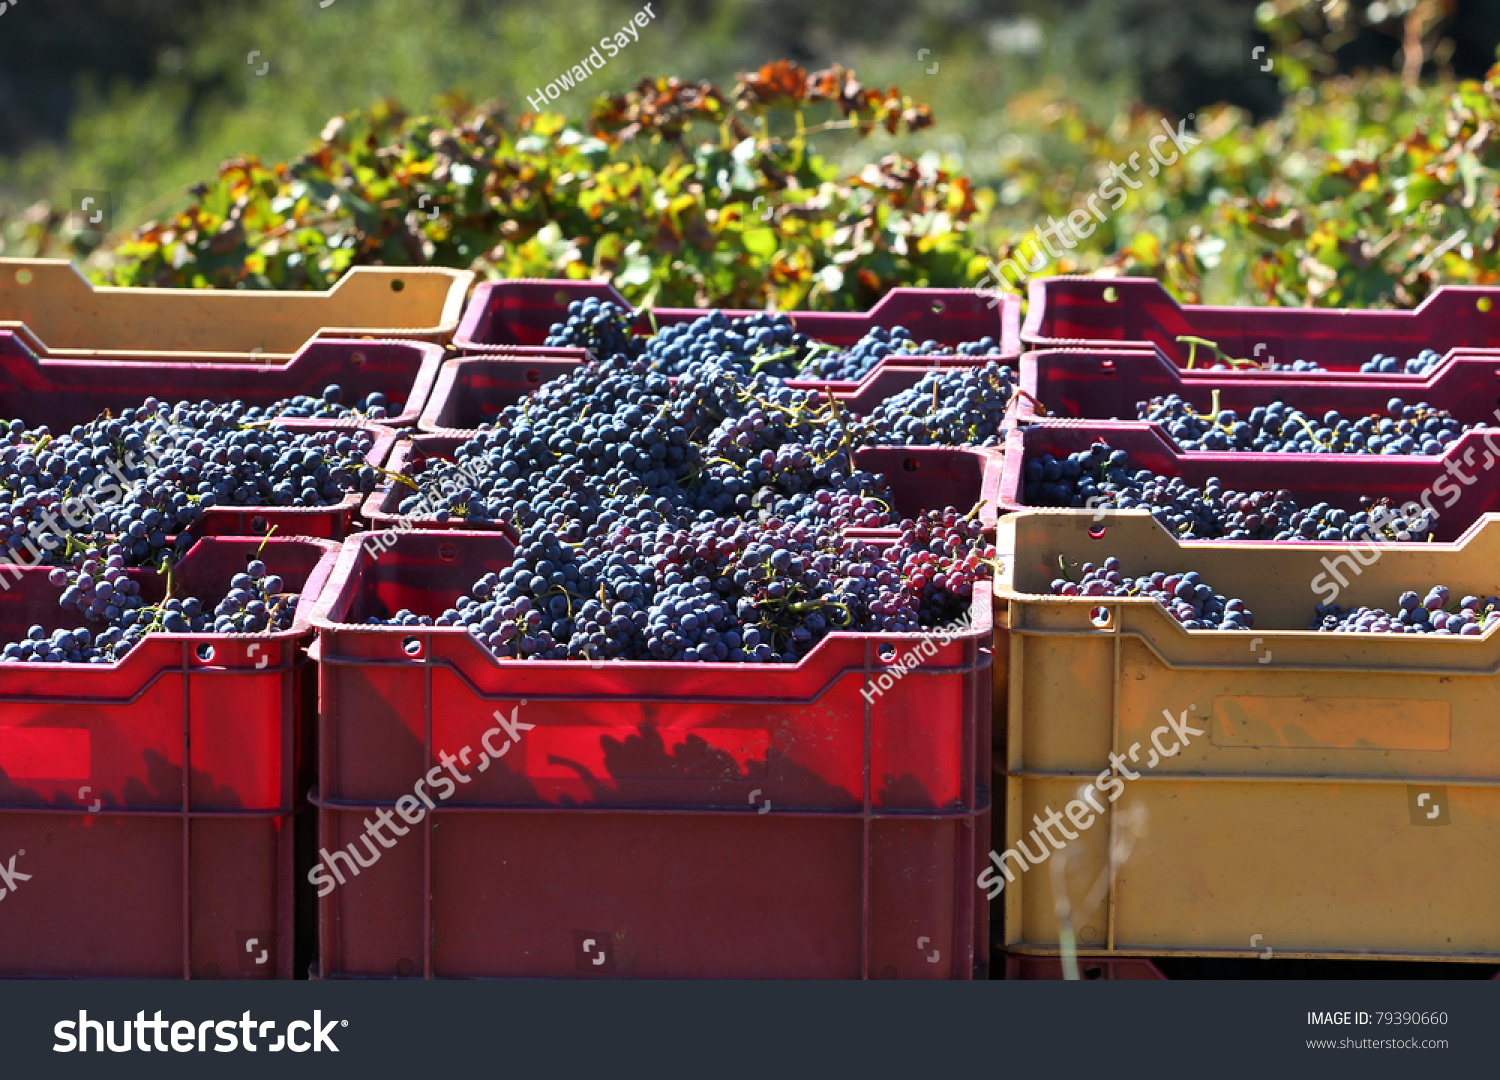 Boxes/picking grape